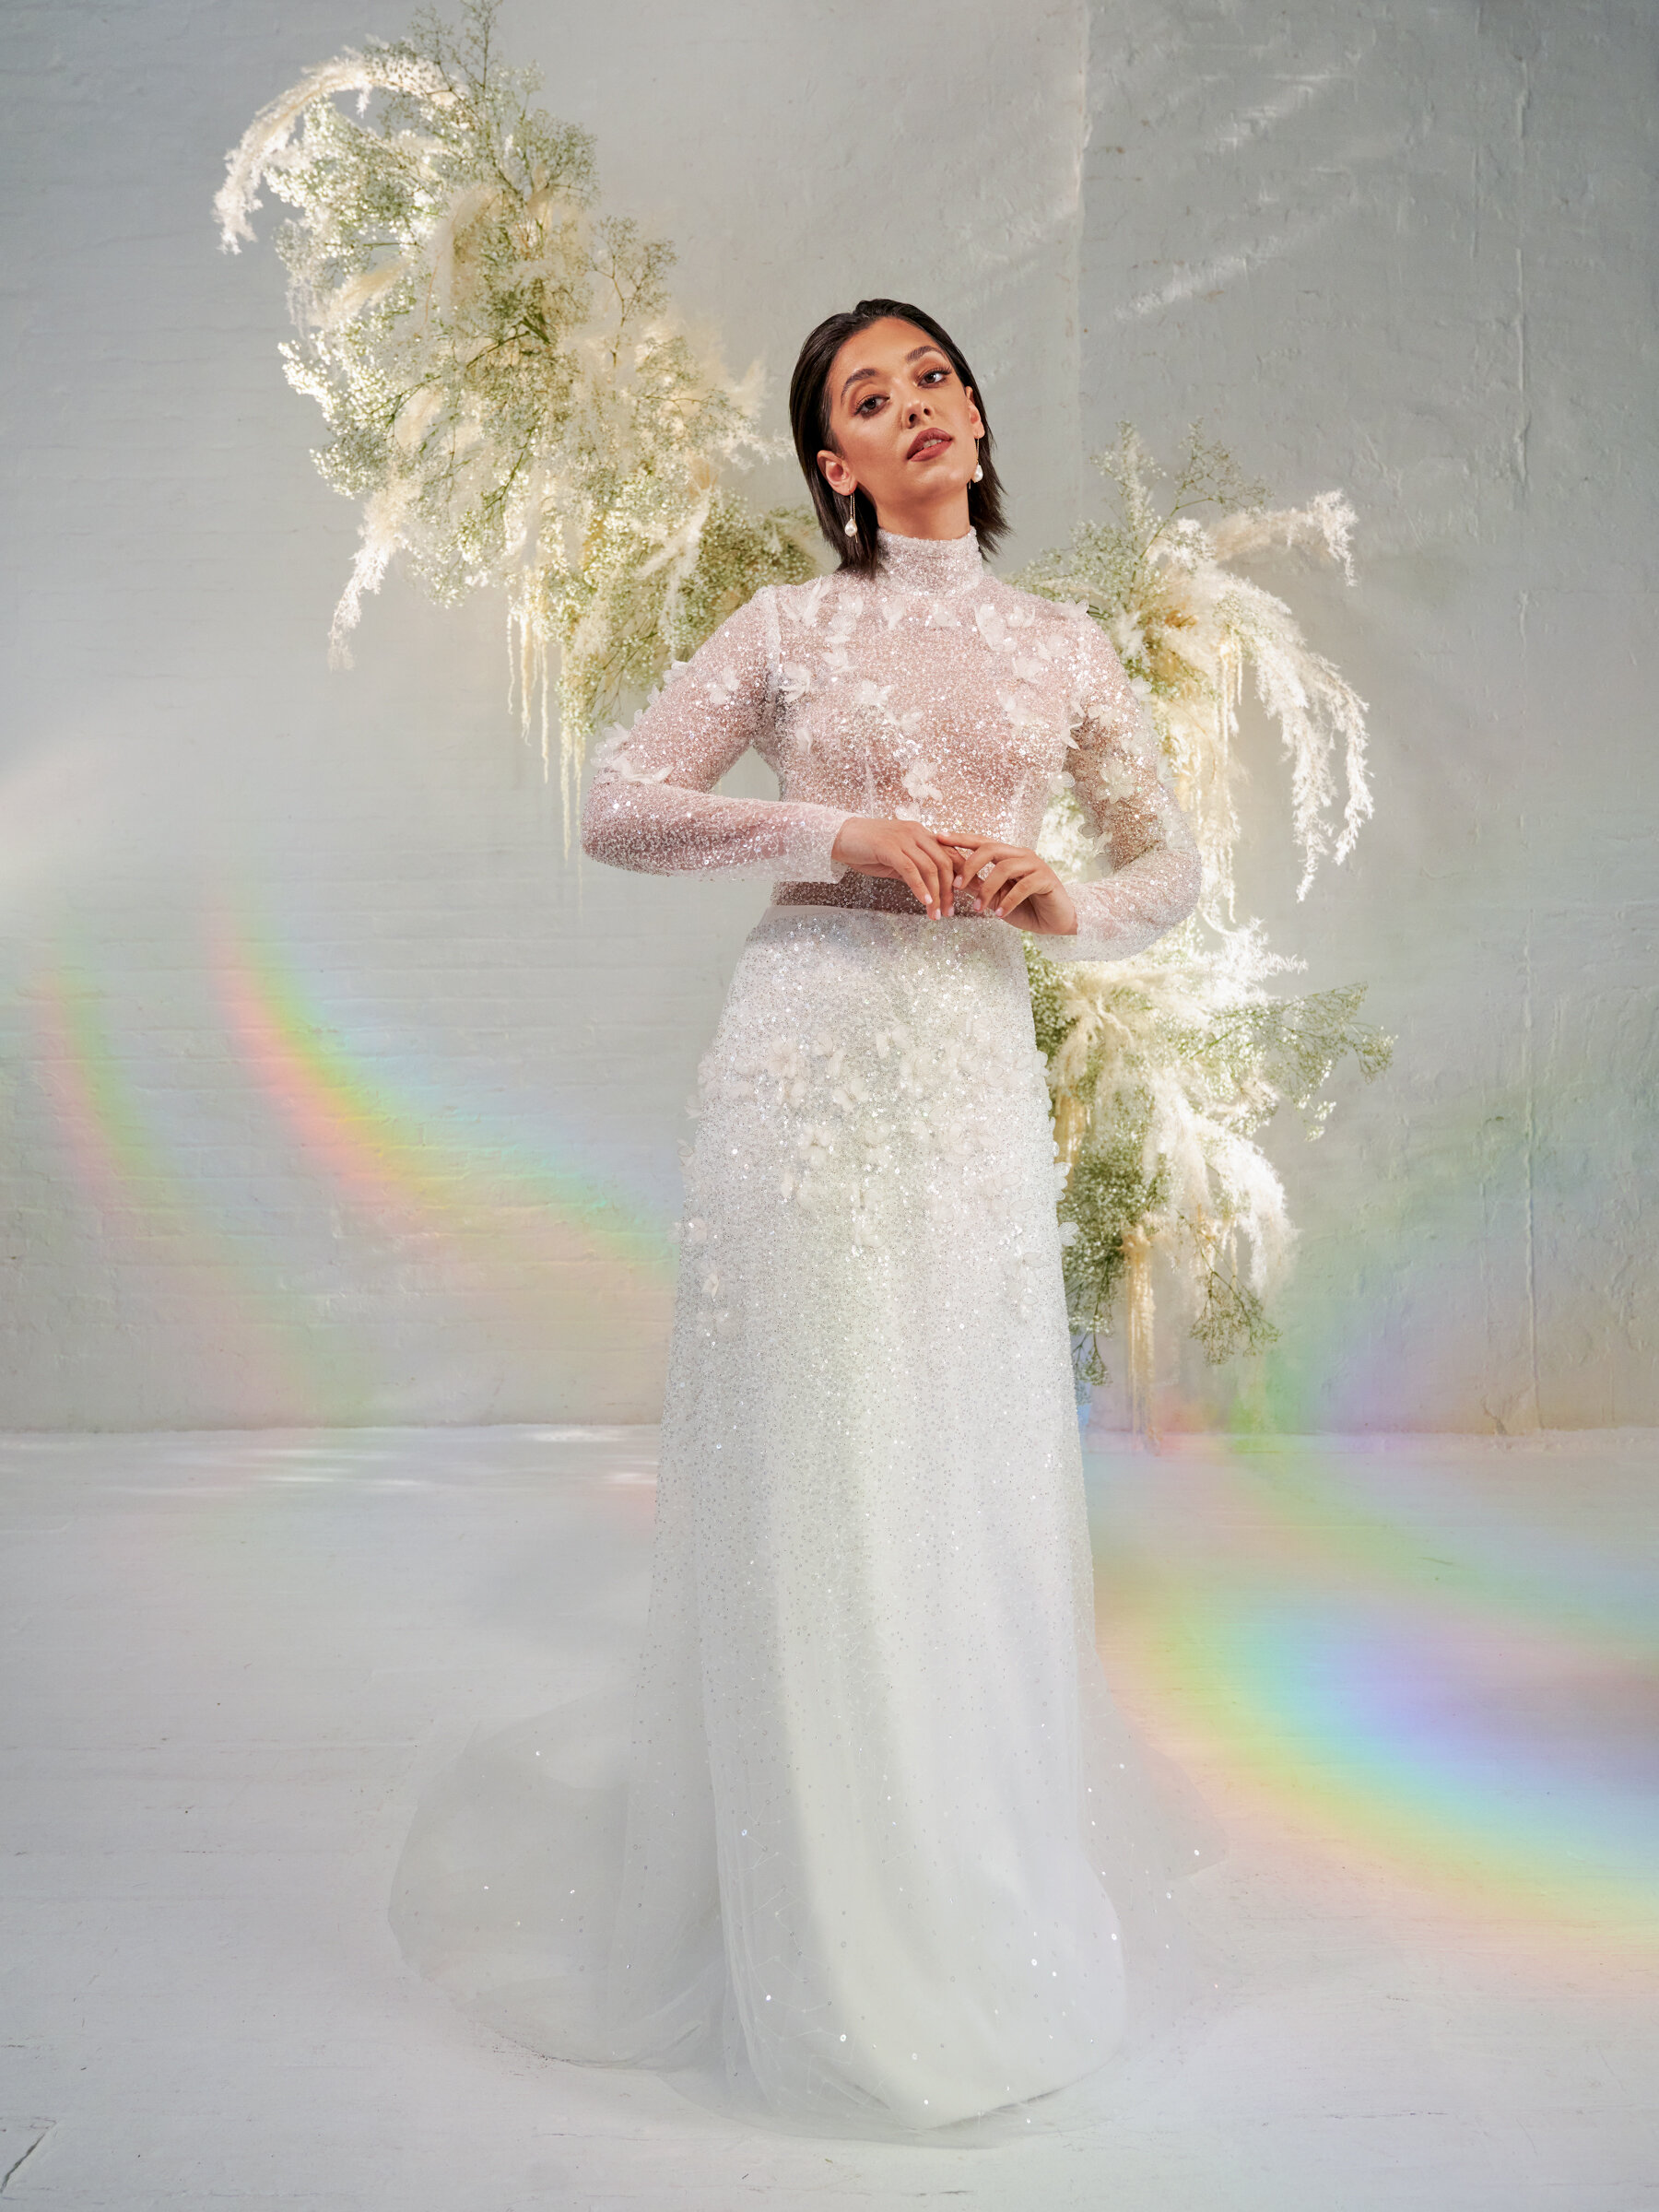 Fantasia wedding gown -modern whimsical high neck 1.jpg